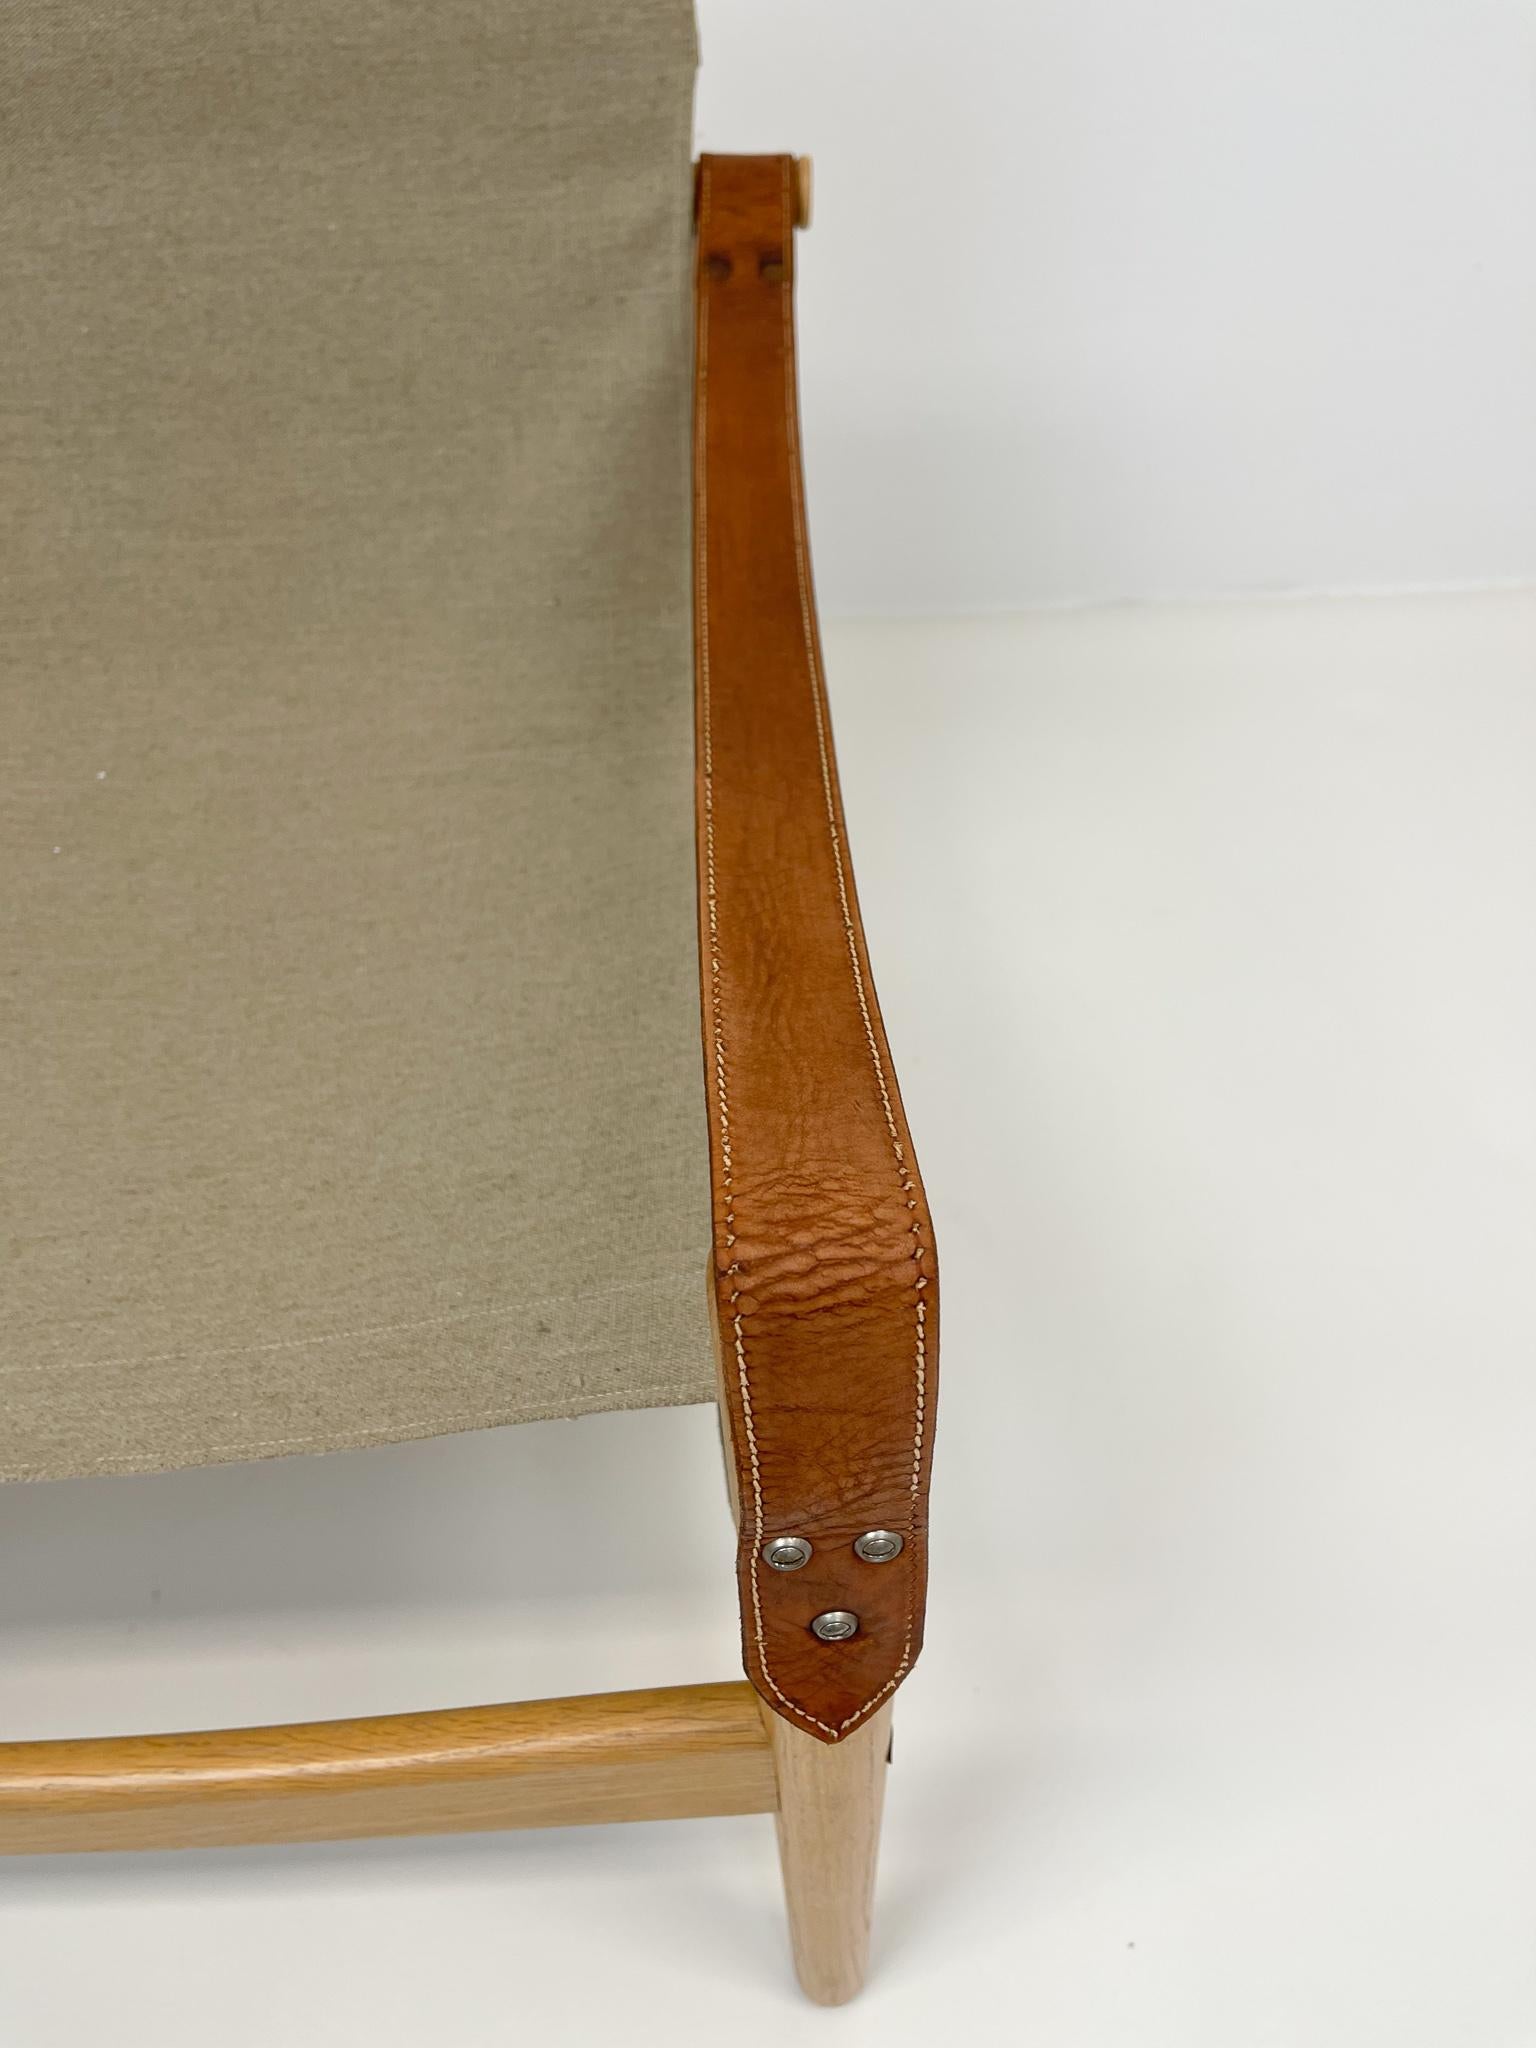 Linen Mid-Century Lounge Chair Hans Olsen ”Gazelle” Chair, 1960s Sweden For Sale